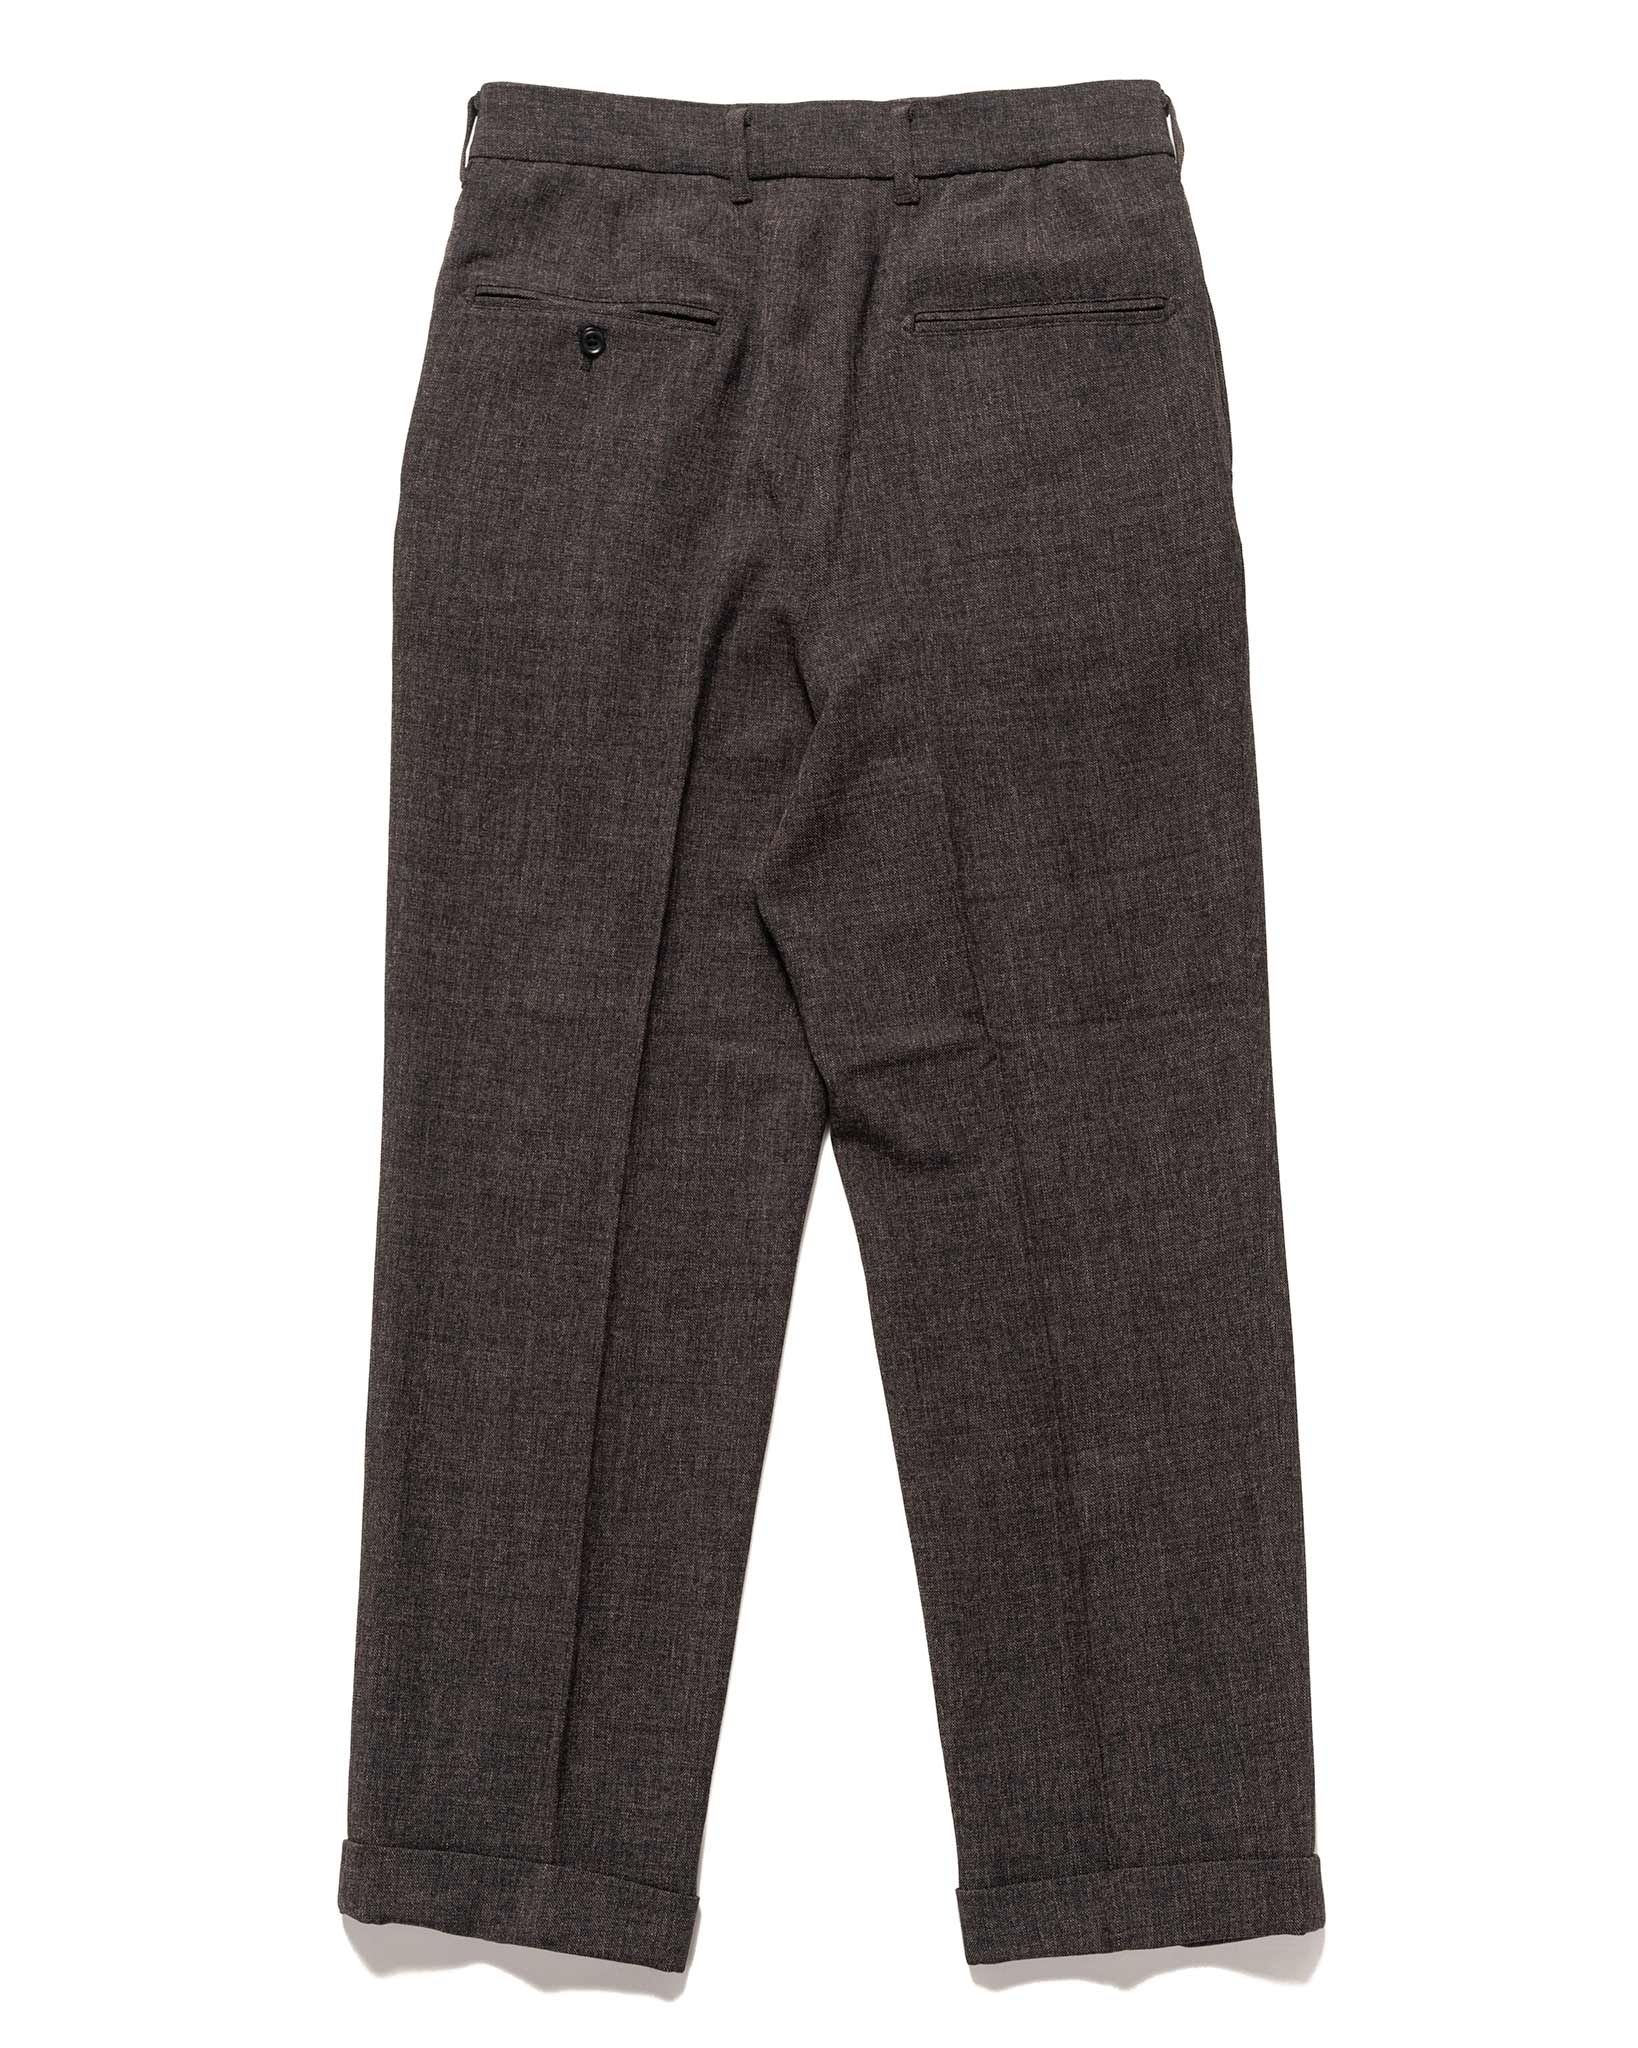 Tucked Trouser - PE/PU Stretch Twill Black - 5